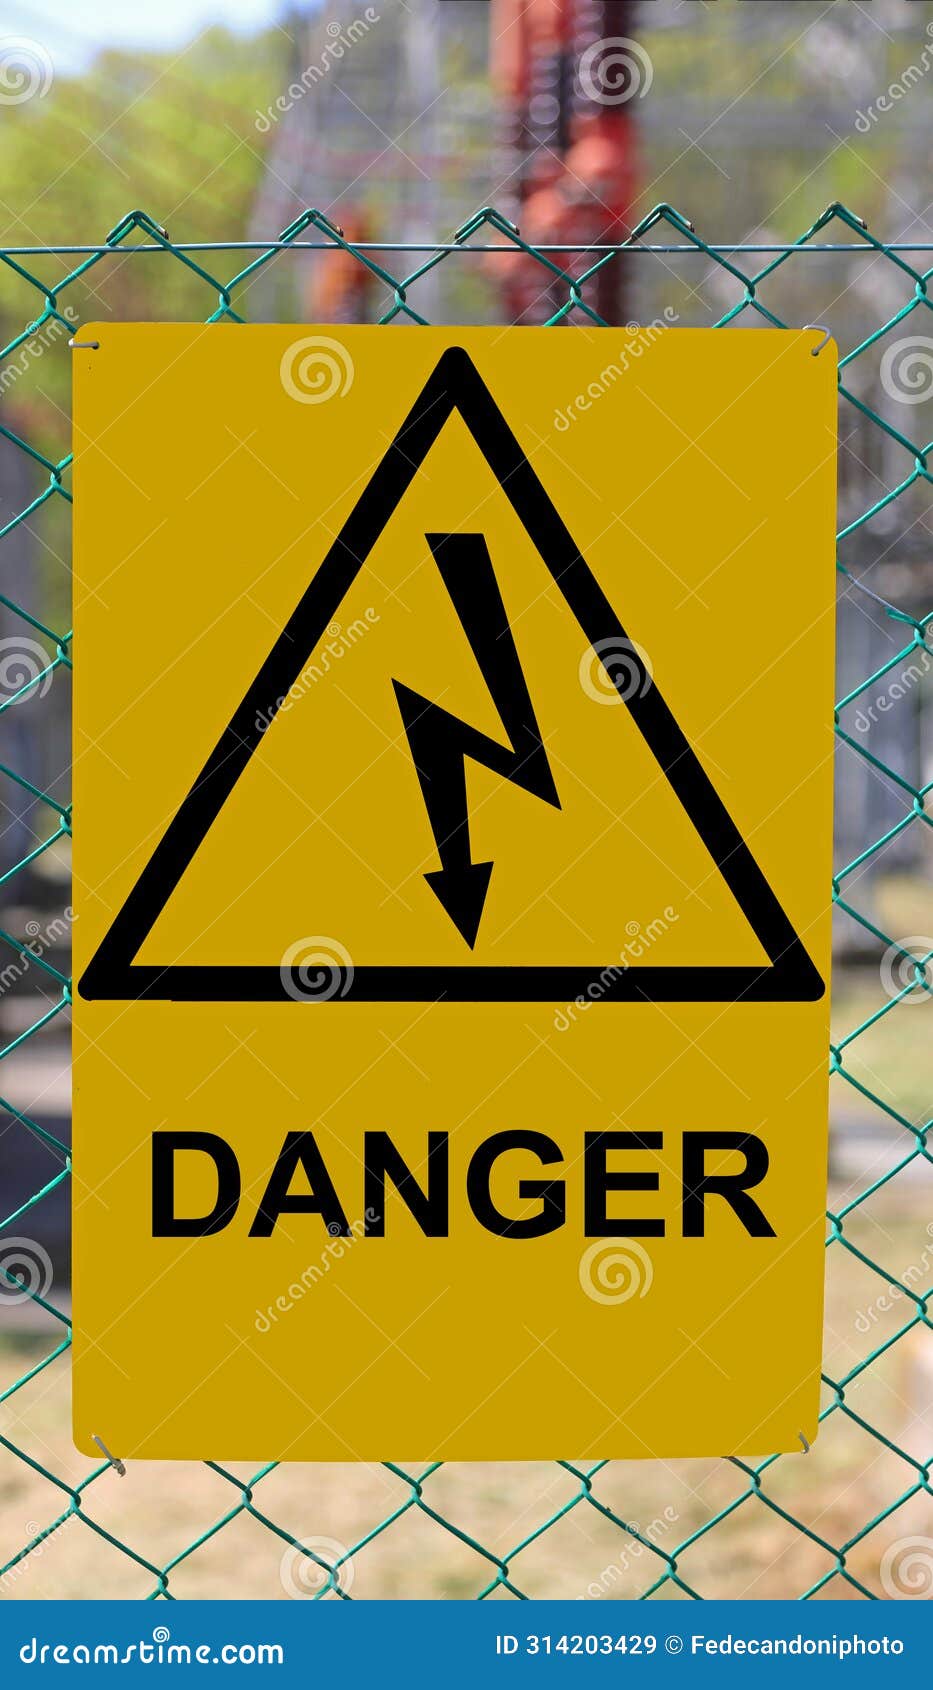 danger high voltage risk of death sign  with lightning bolt in triangle